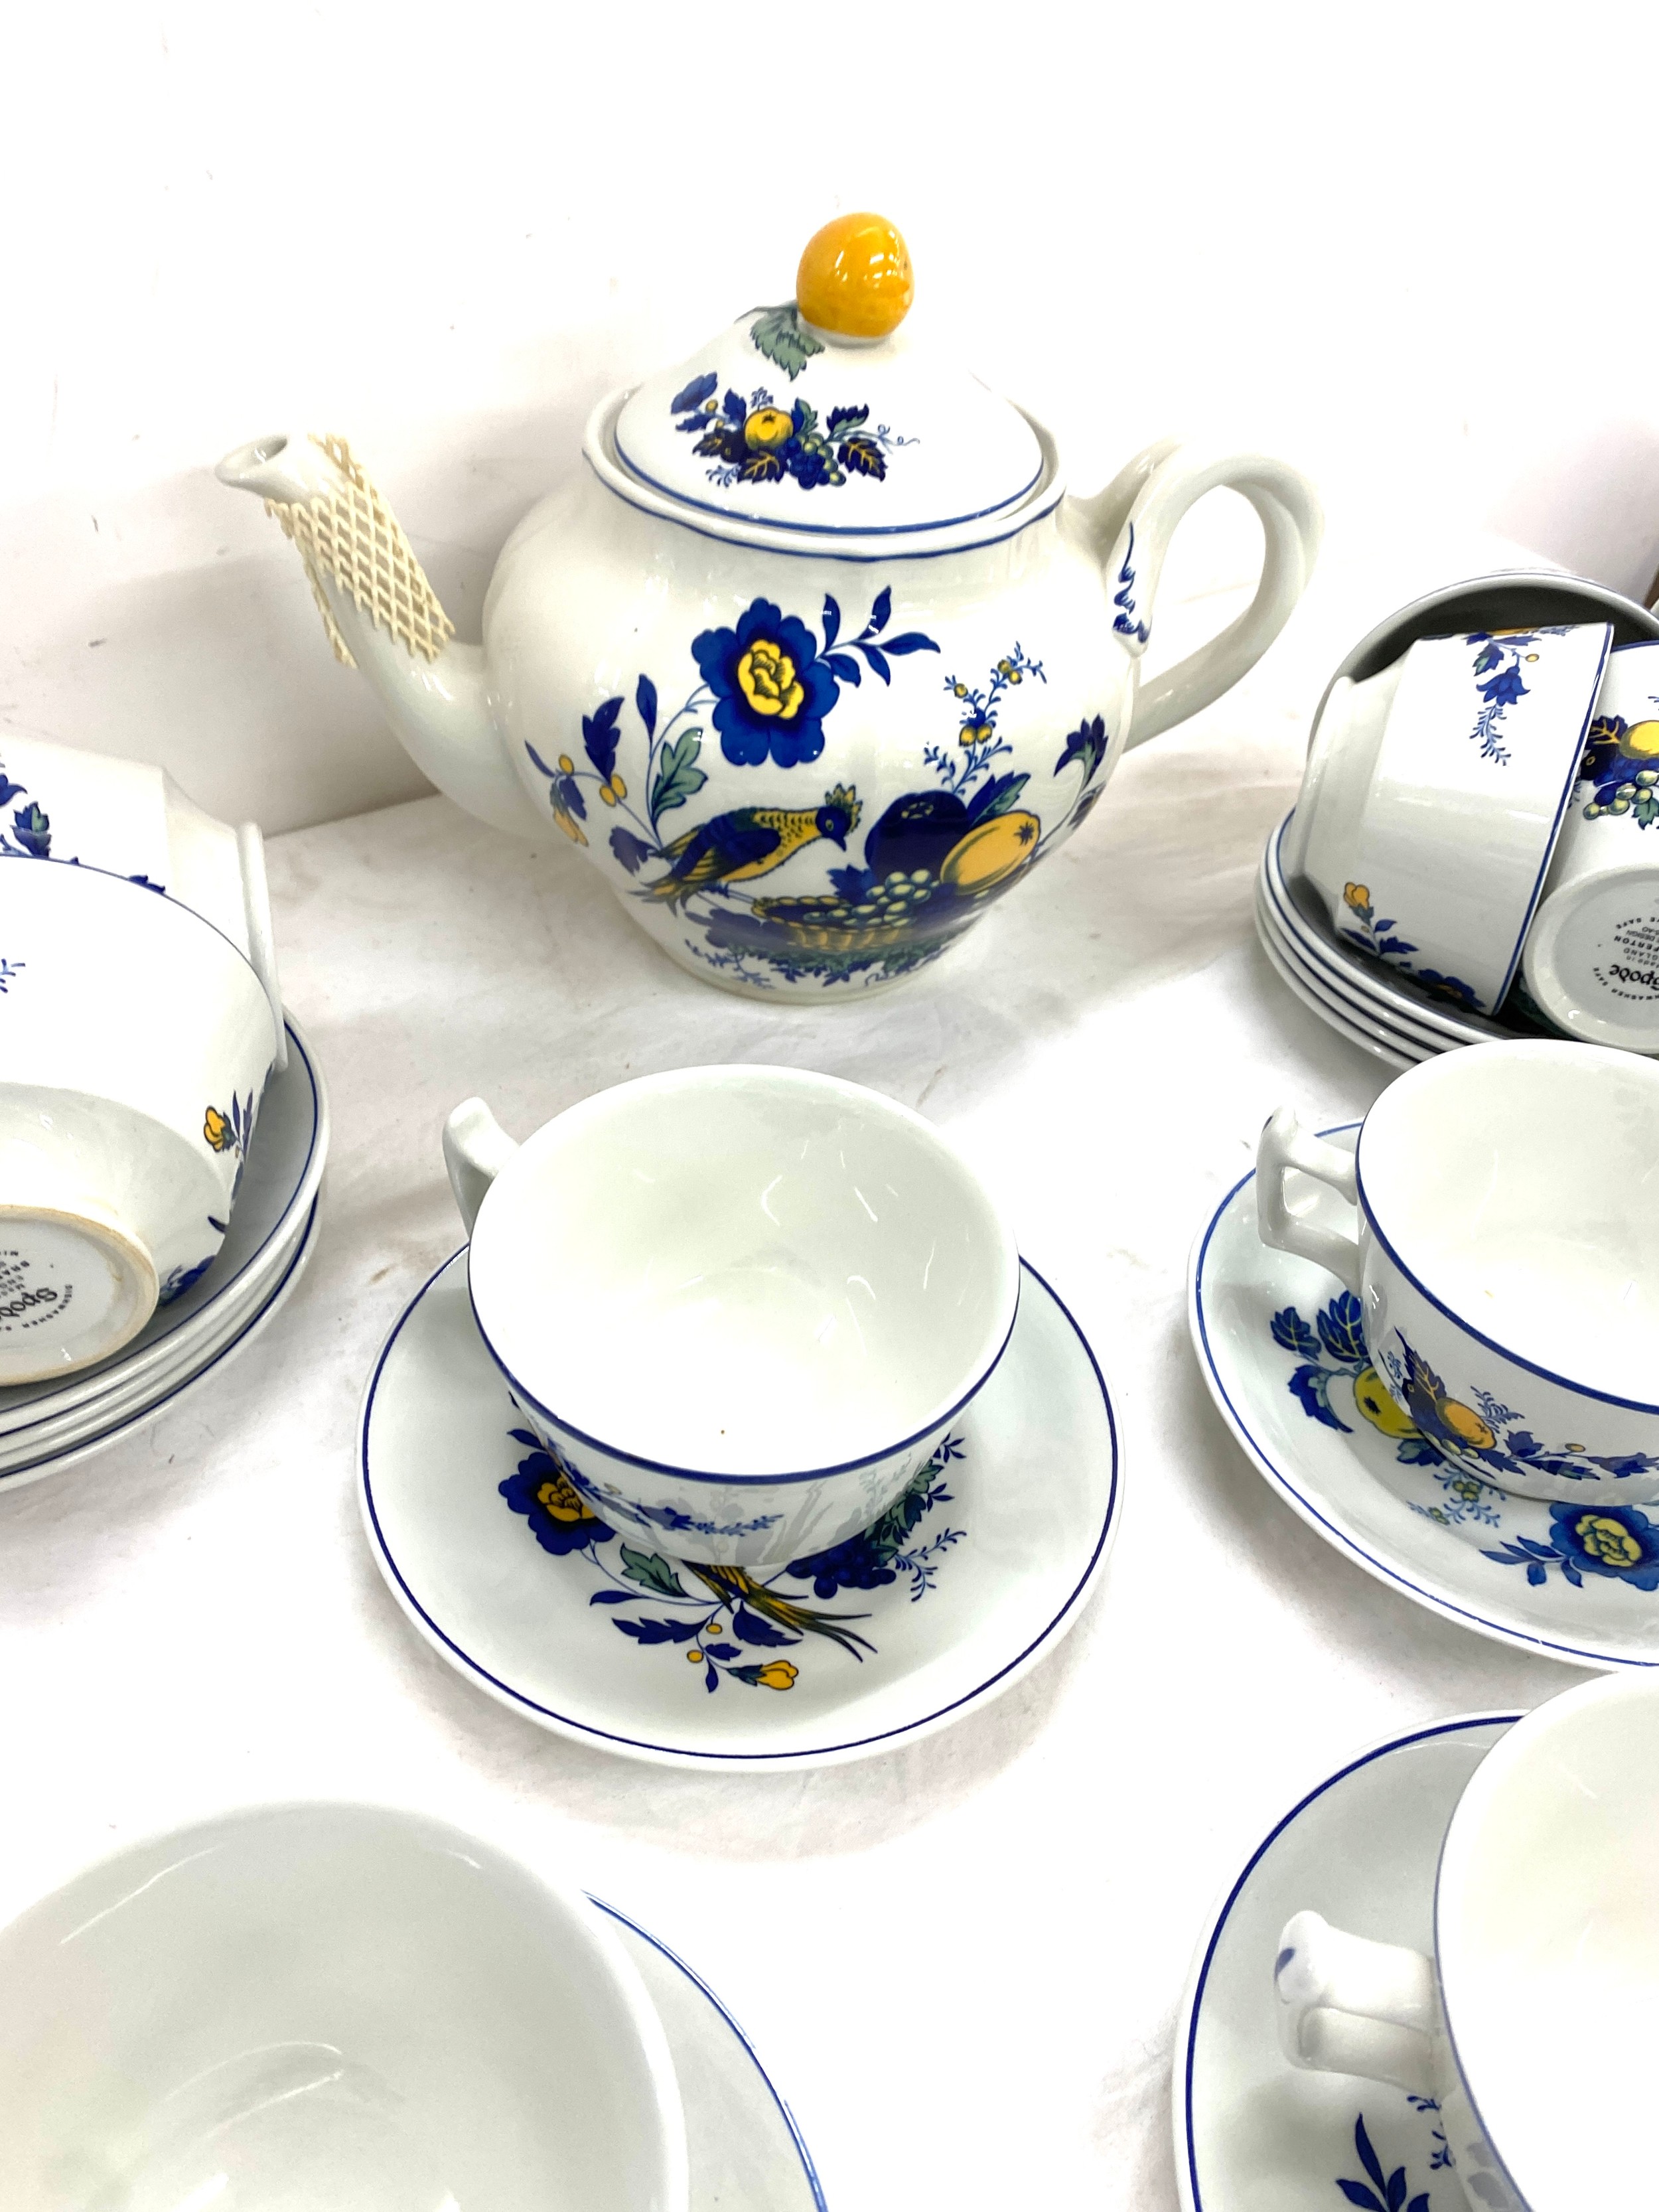 Spode Blue Bird s3274 c1838 - 12 cups 12 saucers 12 tea plates, milk jug, tea pot - Image 2 of 5